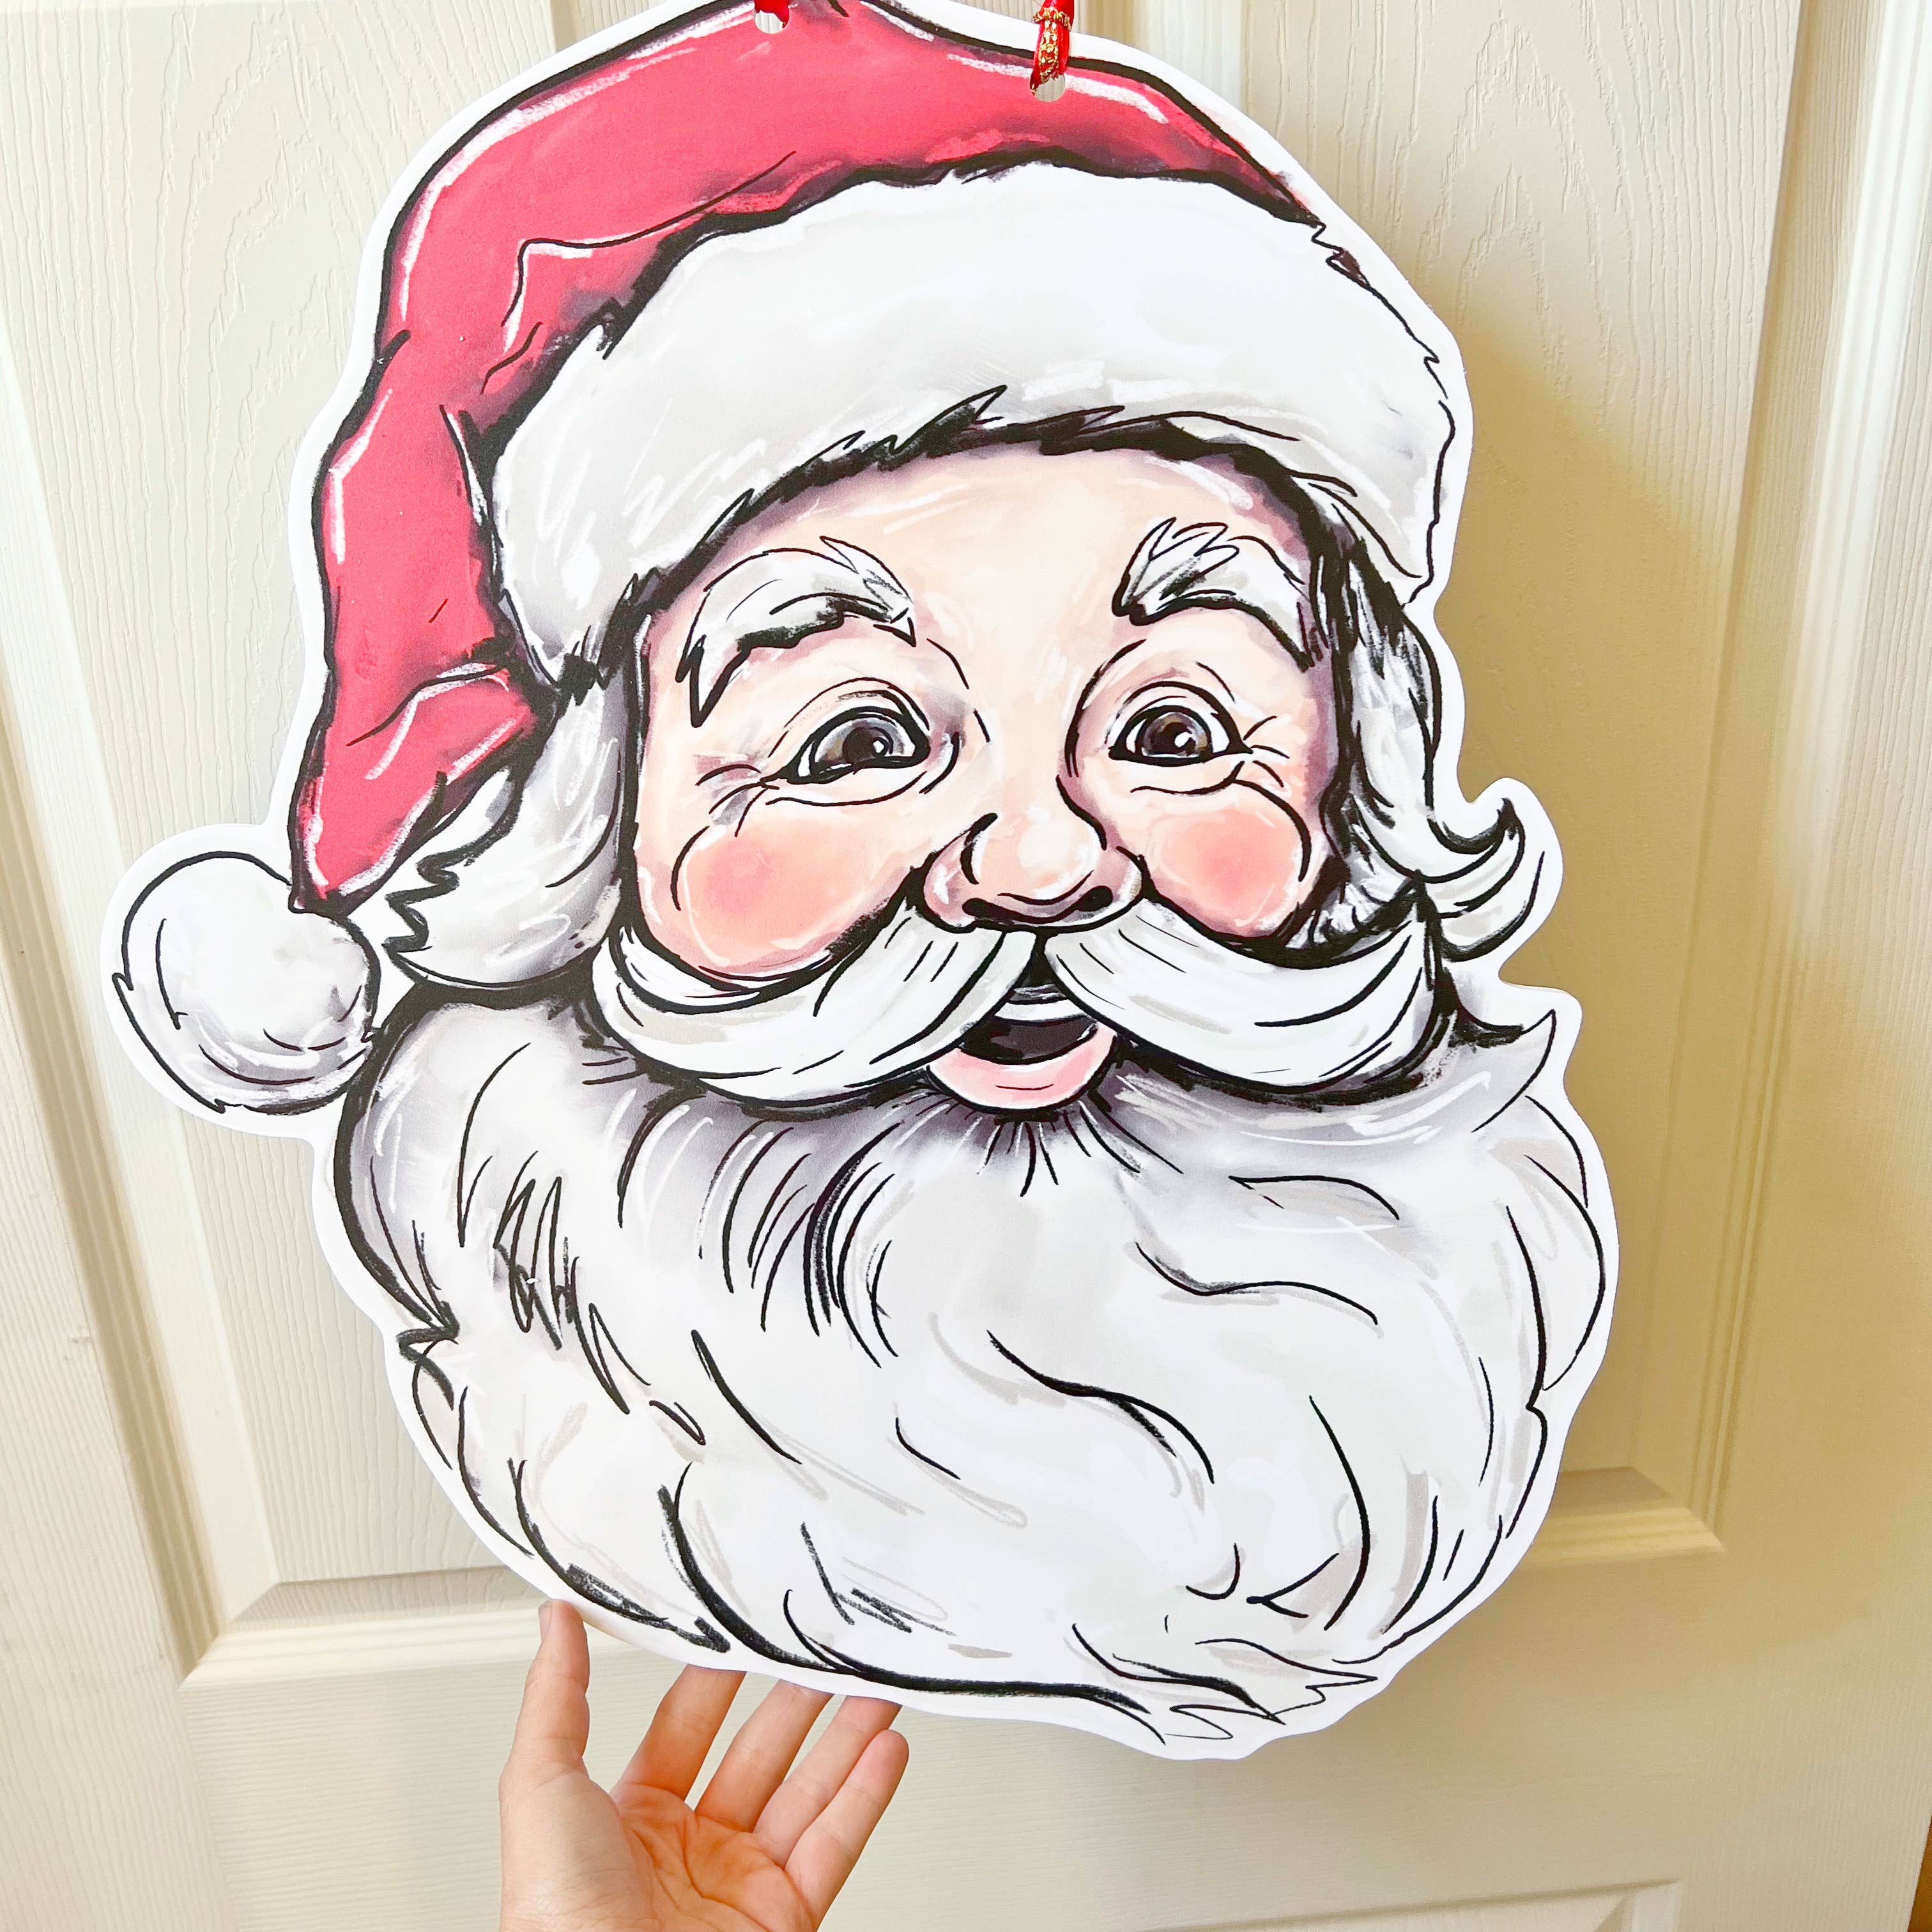 Vintage Jolly Santa Door Hanger -Christmas Holiday Door Sign: Lighter Skin